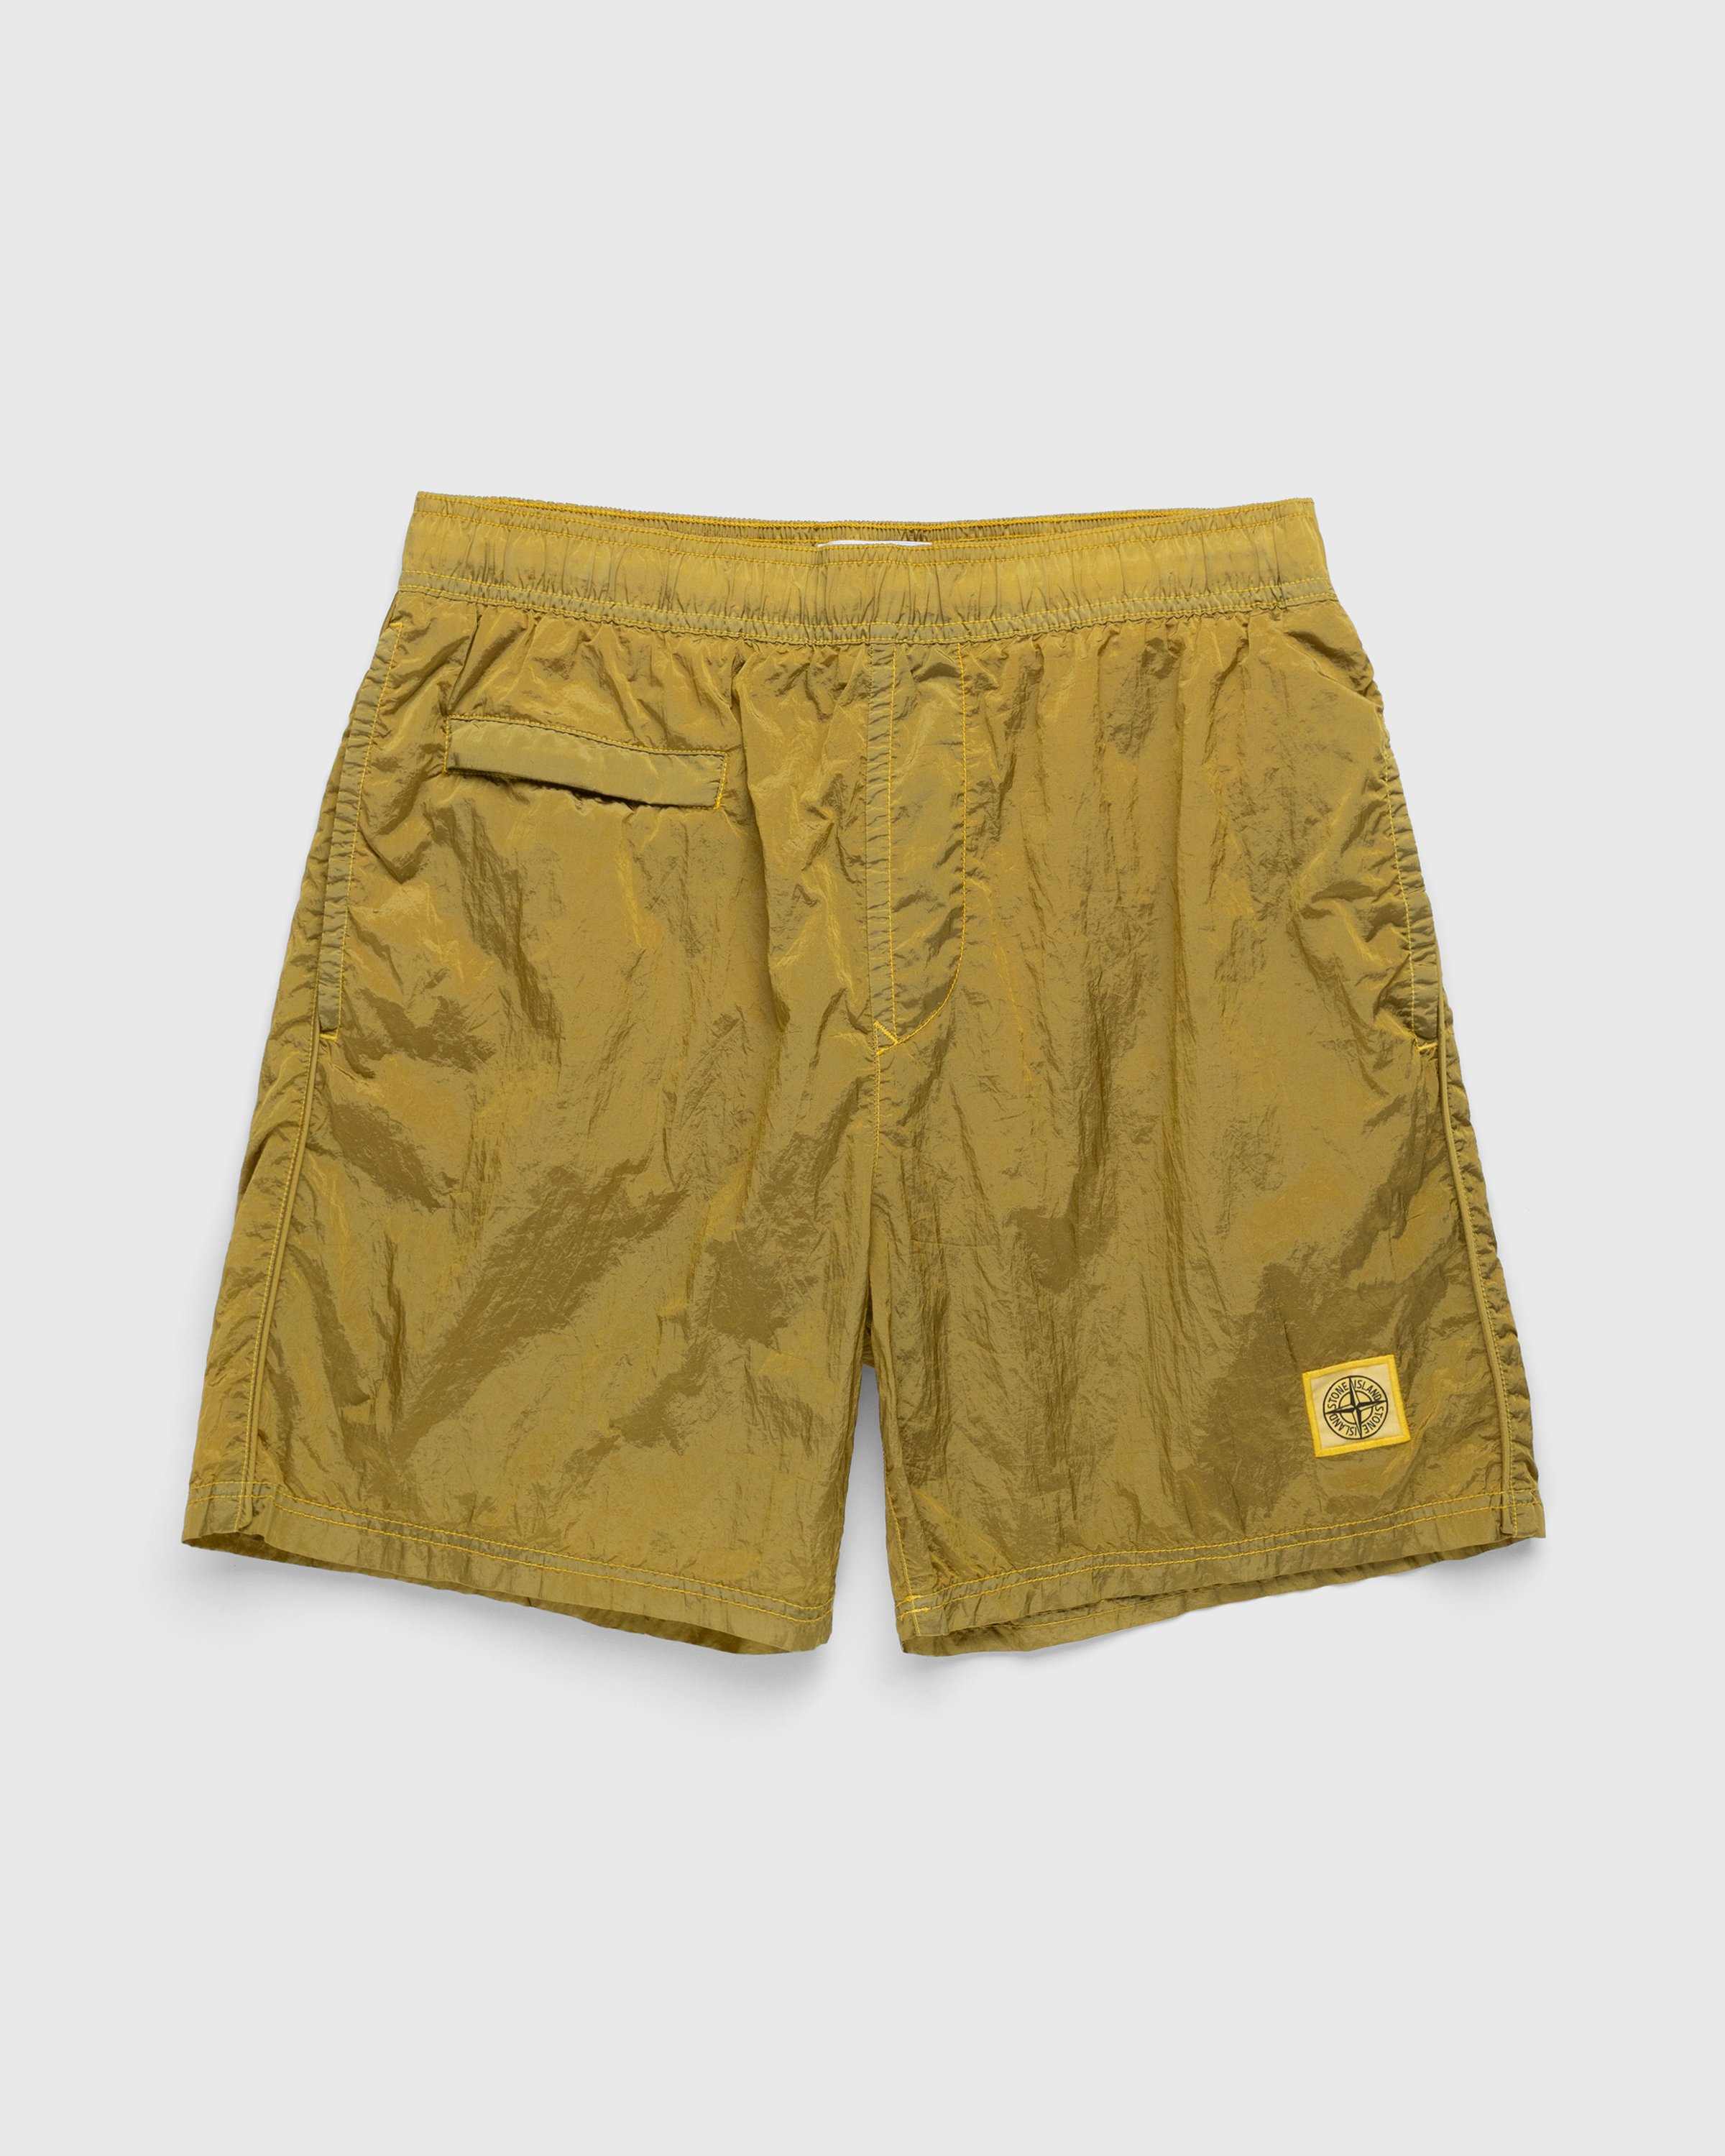 Stone Island - B0243 Nylon Metal Swim Shorts Yellow - Clothing - Yellow - Image 1